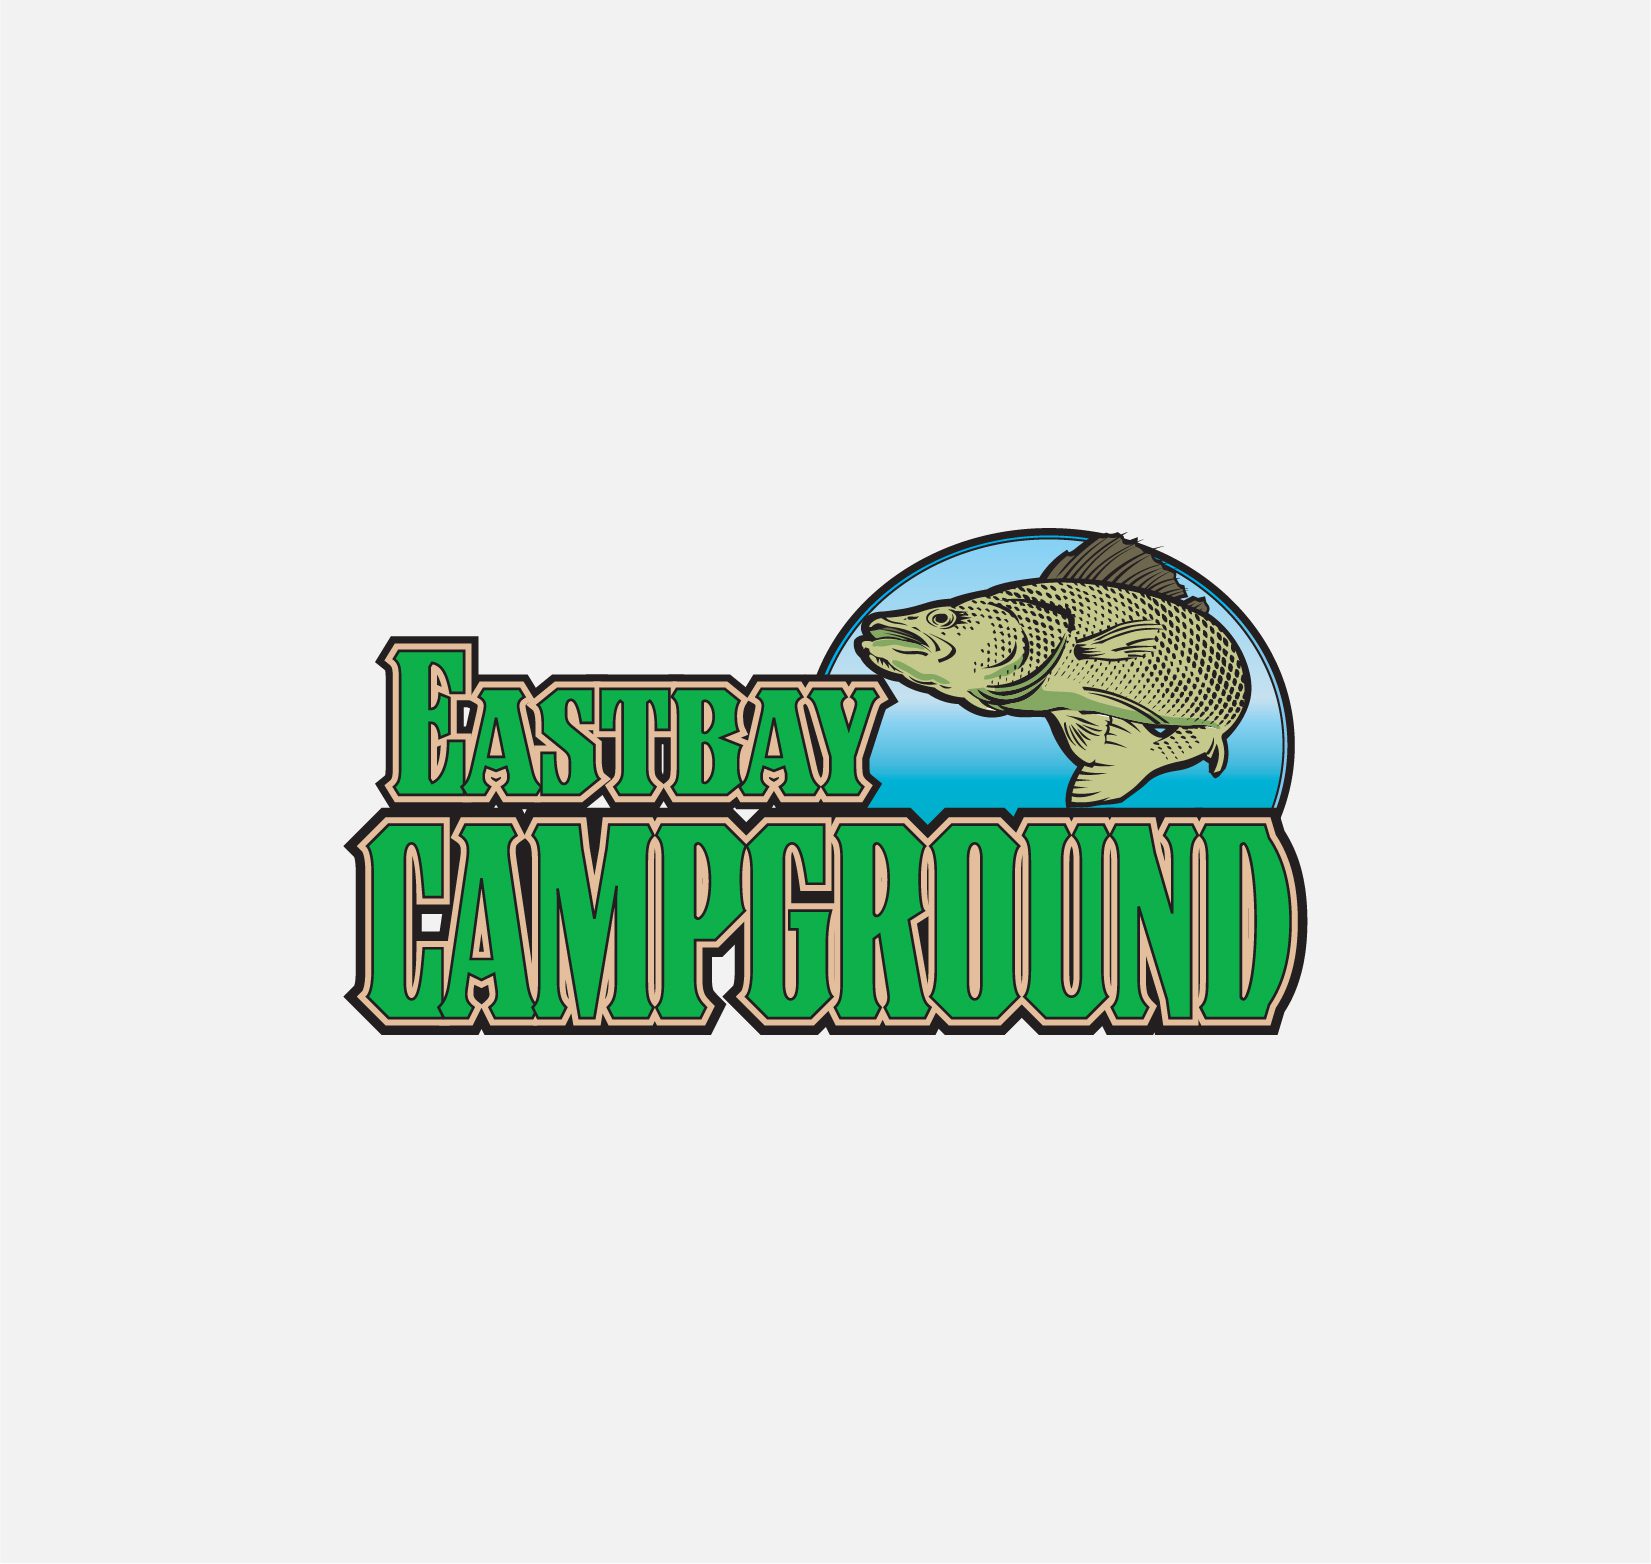 Eastbay Campground logo